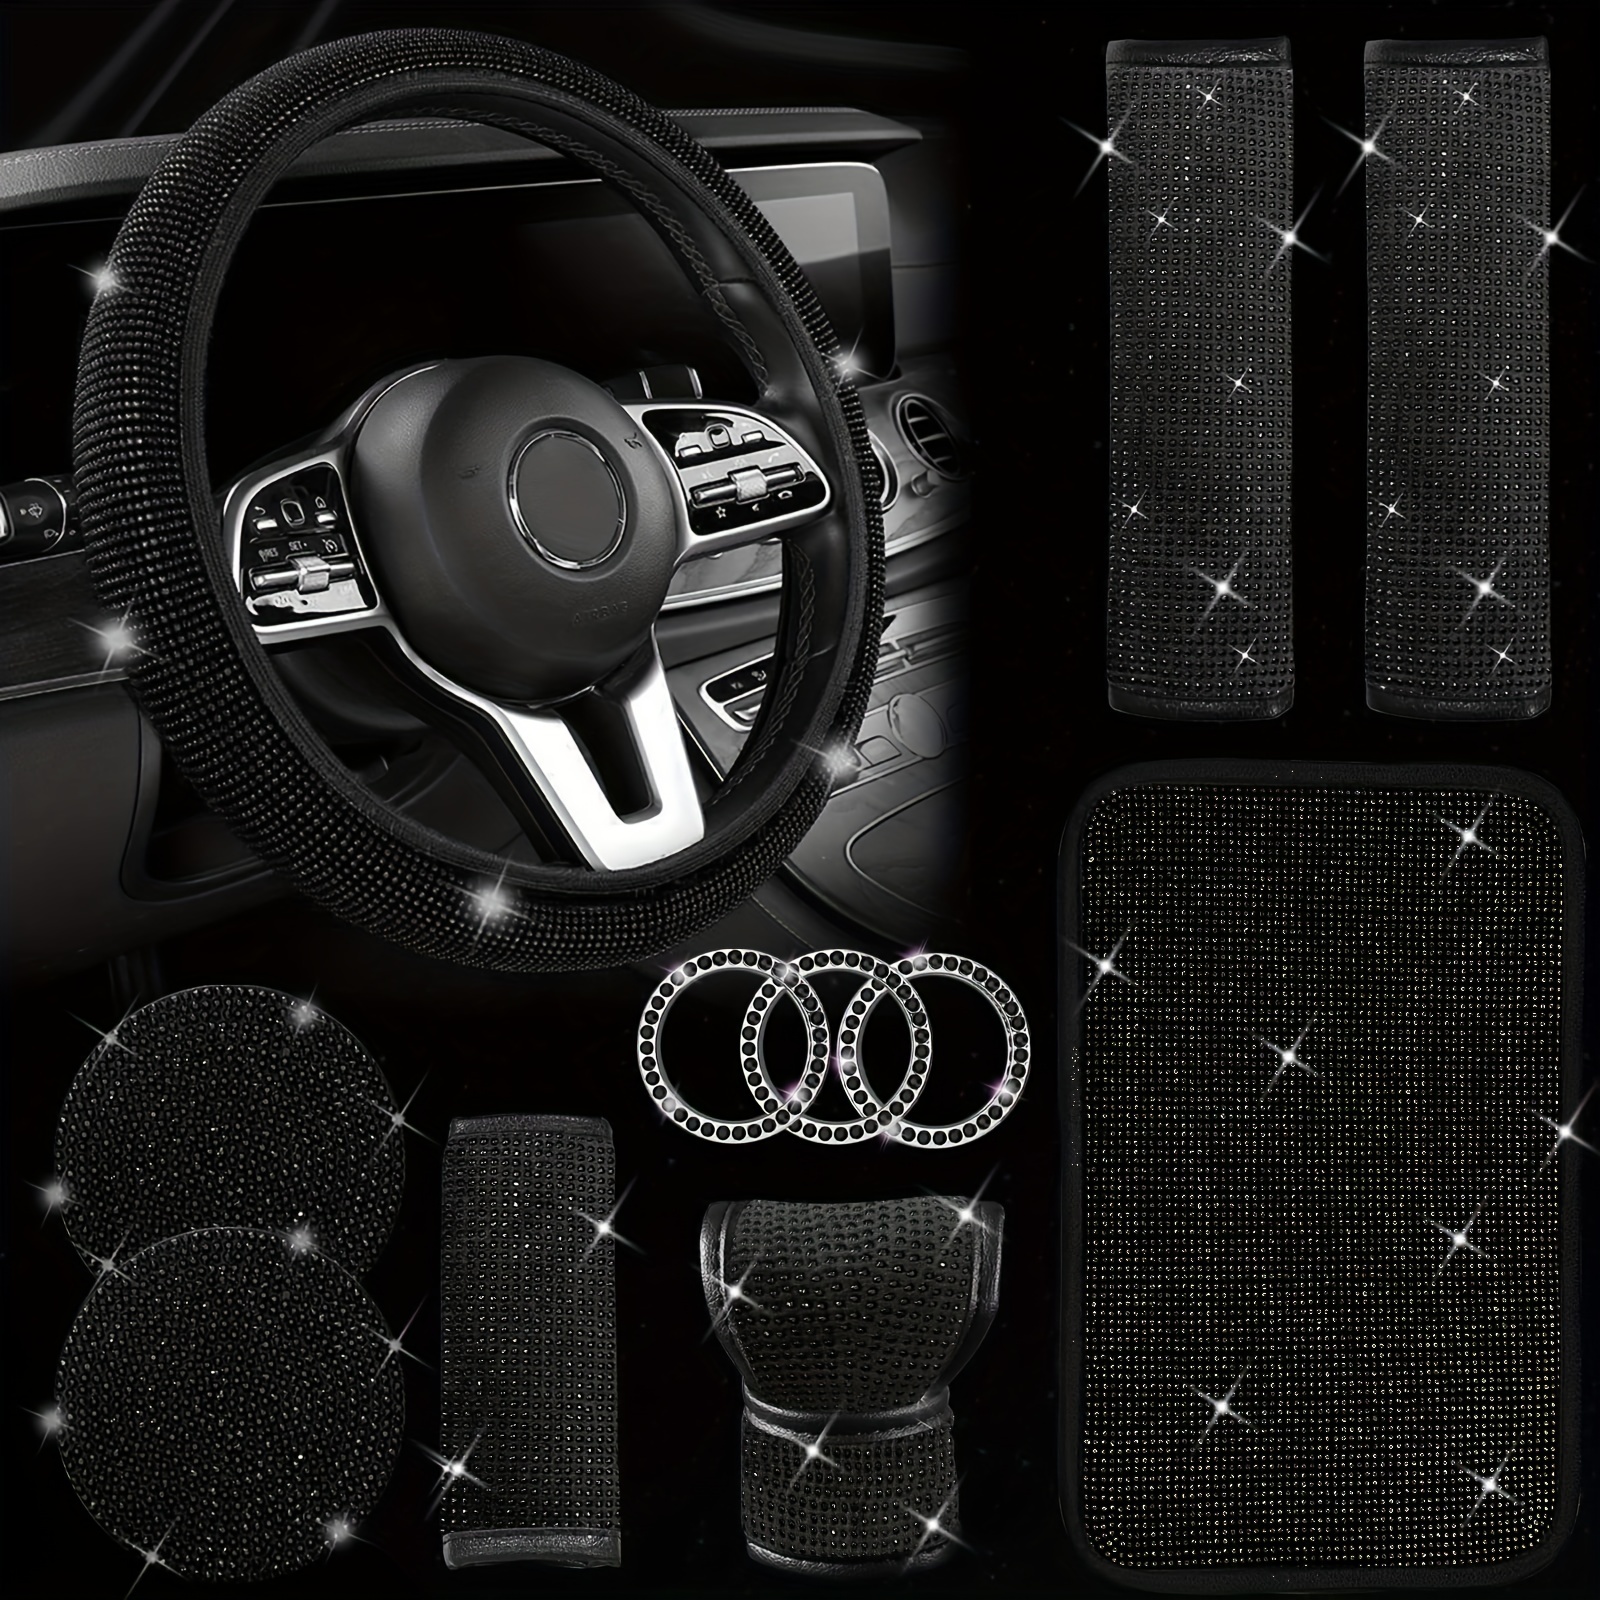 Universal Rhinestone Diamond Car Accessories Steering Wheel Cover